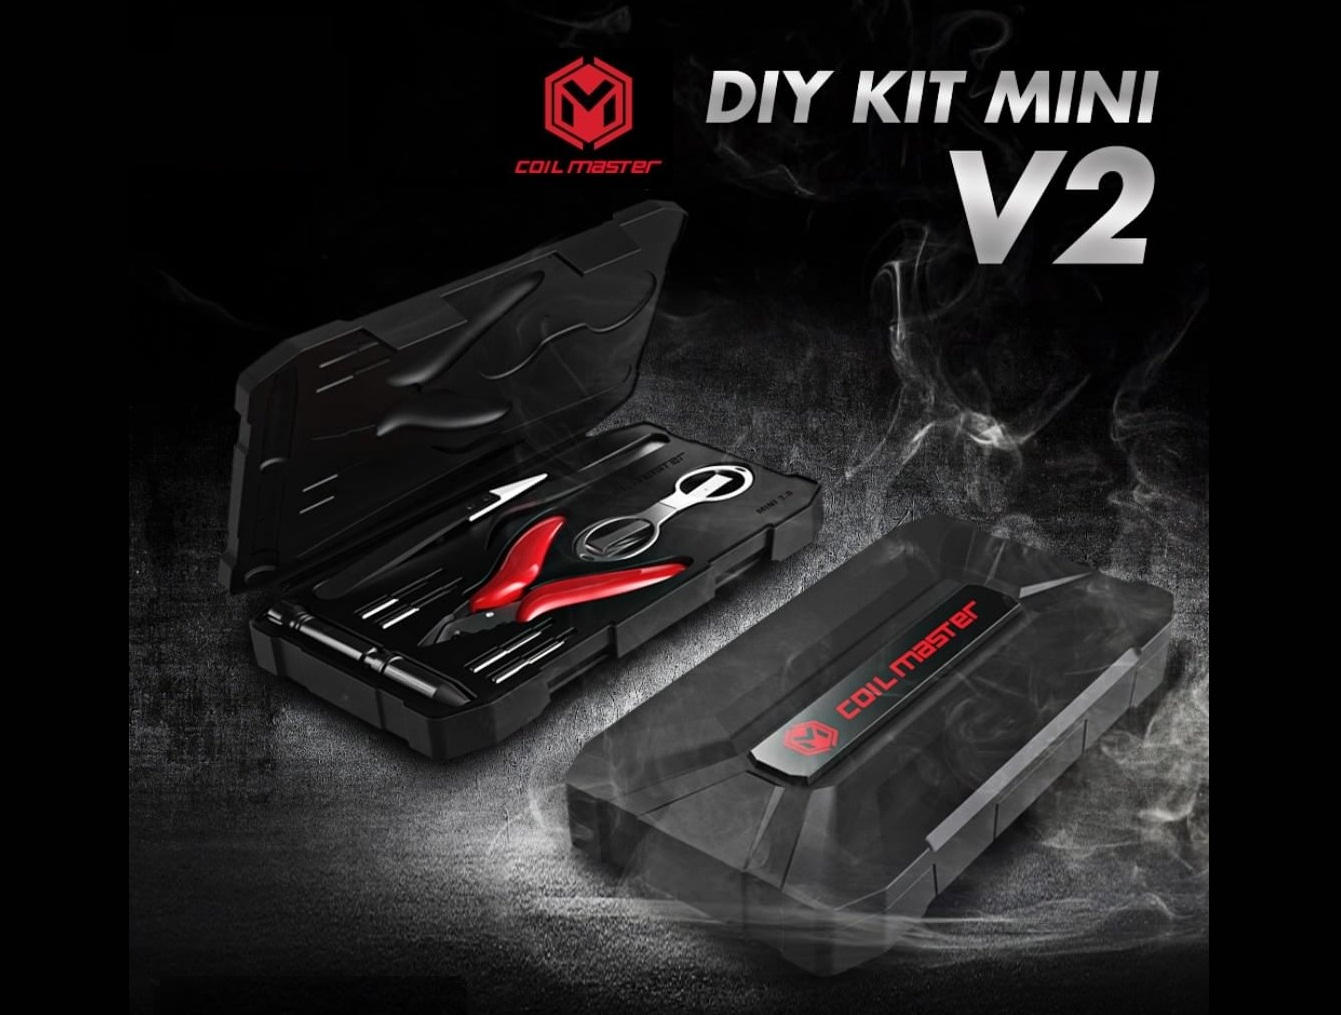 Coil Master DIY Kit Mini V2 - оставили только необходимый минимум...